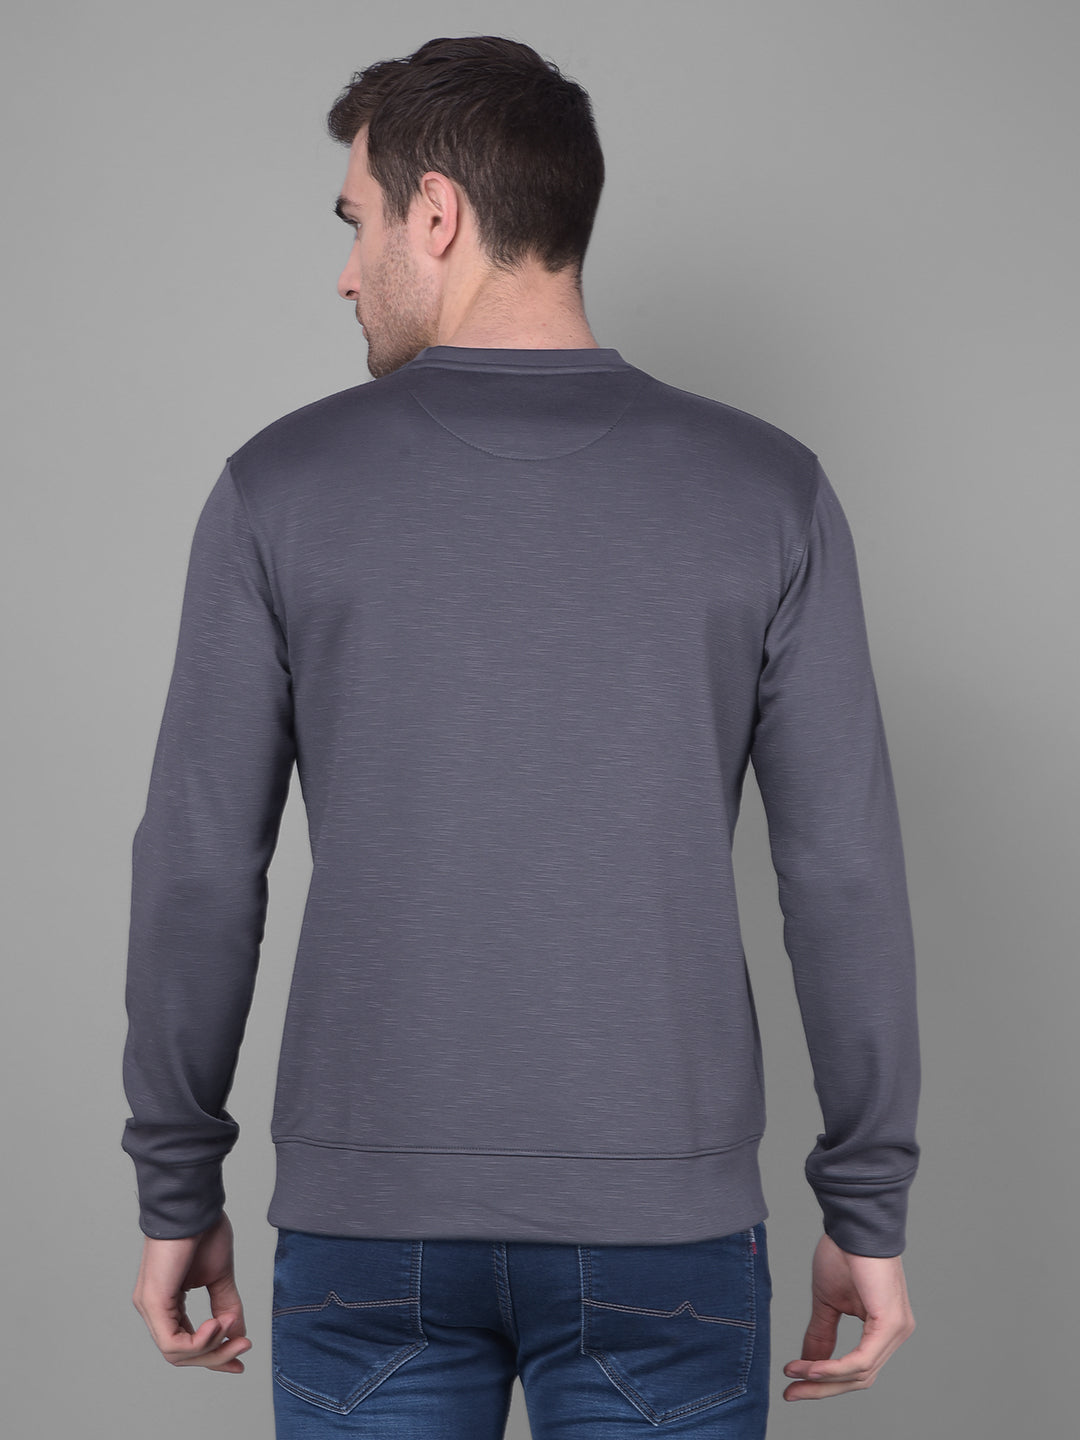 cobb slate grey printed round neck sweatshirt